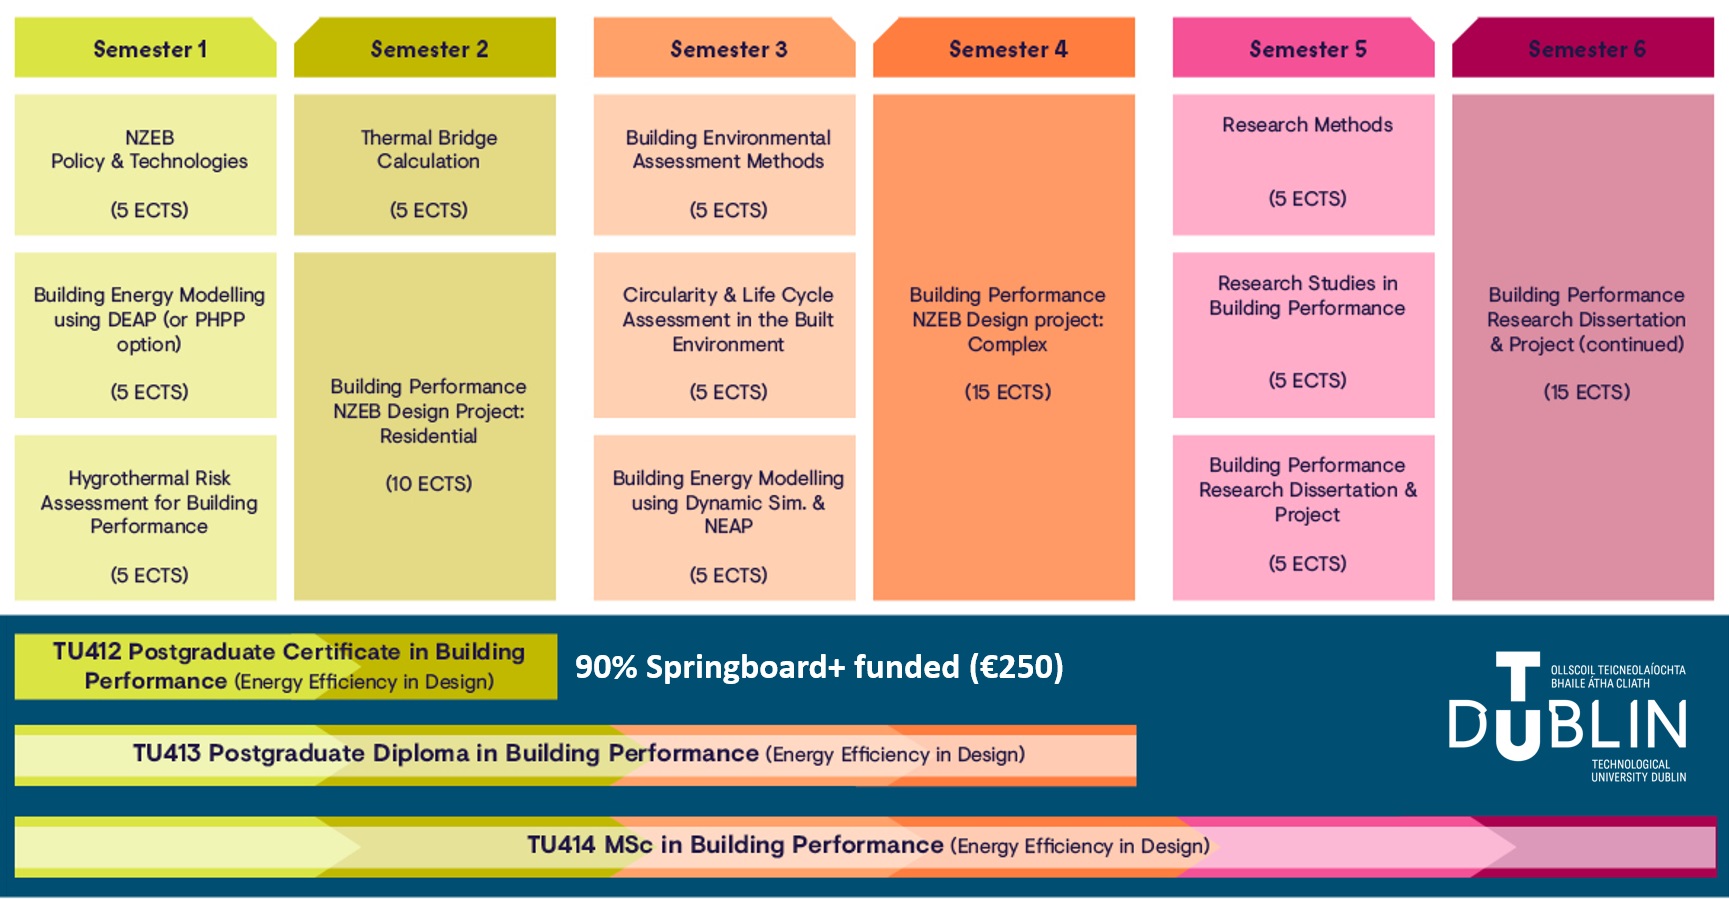 Springboard+ funding for TU412 PCCert Building Performance - main 1